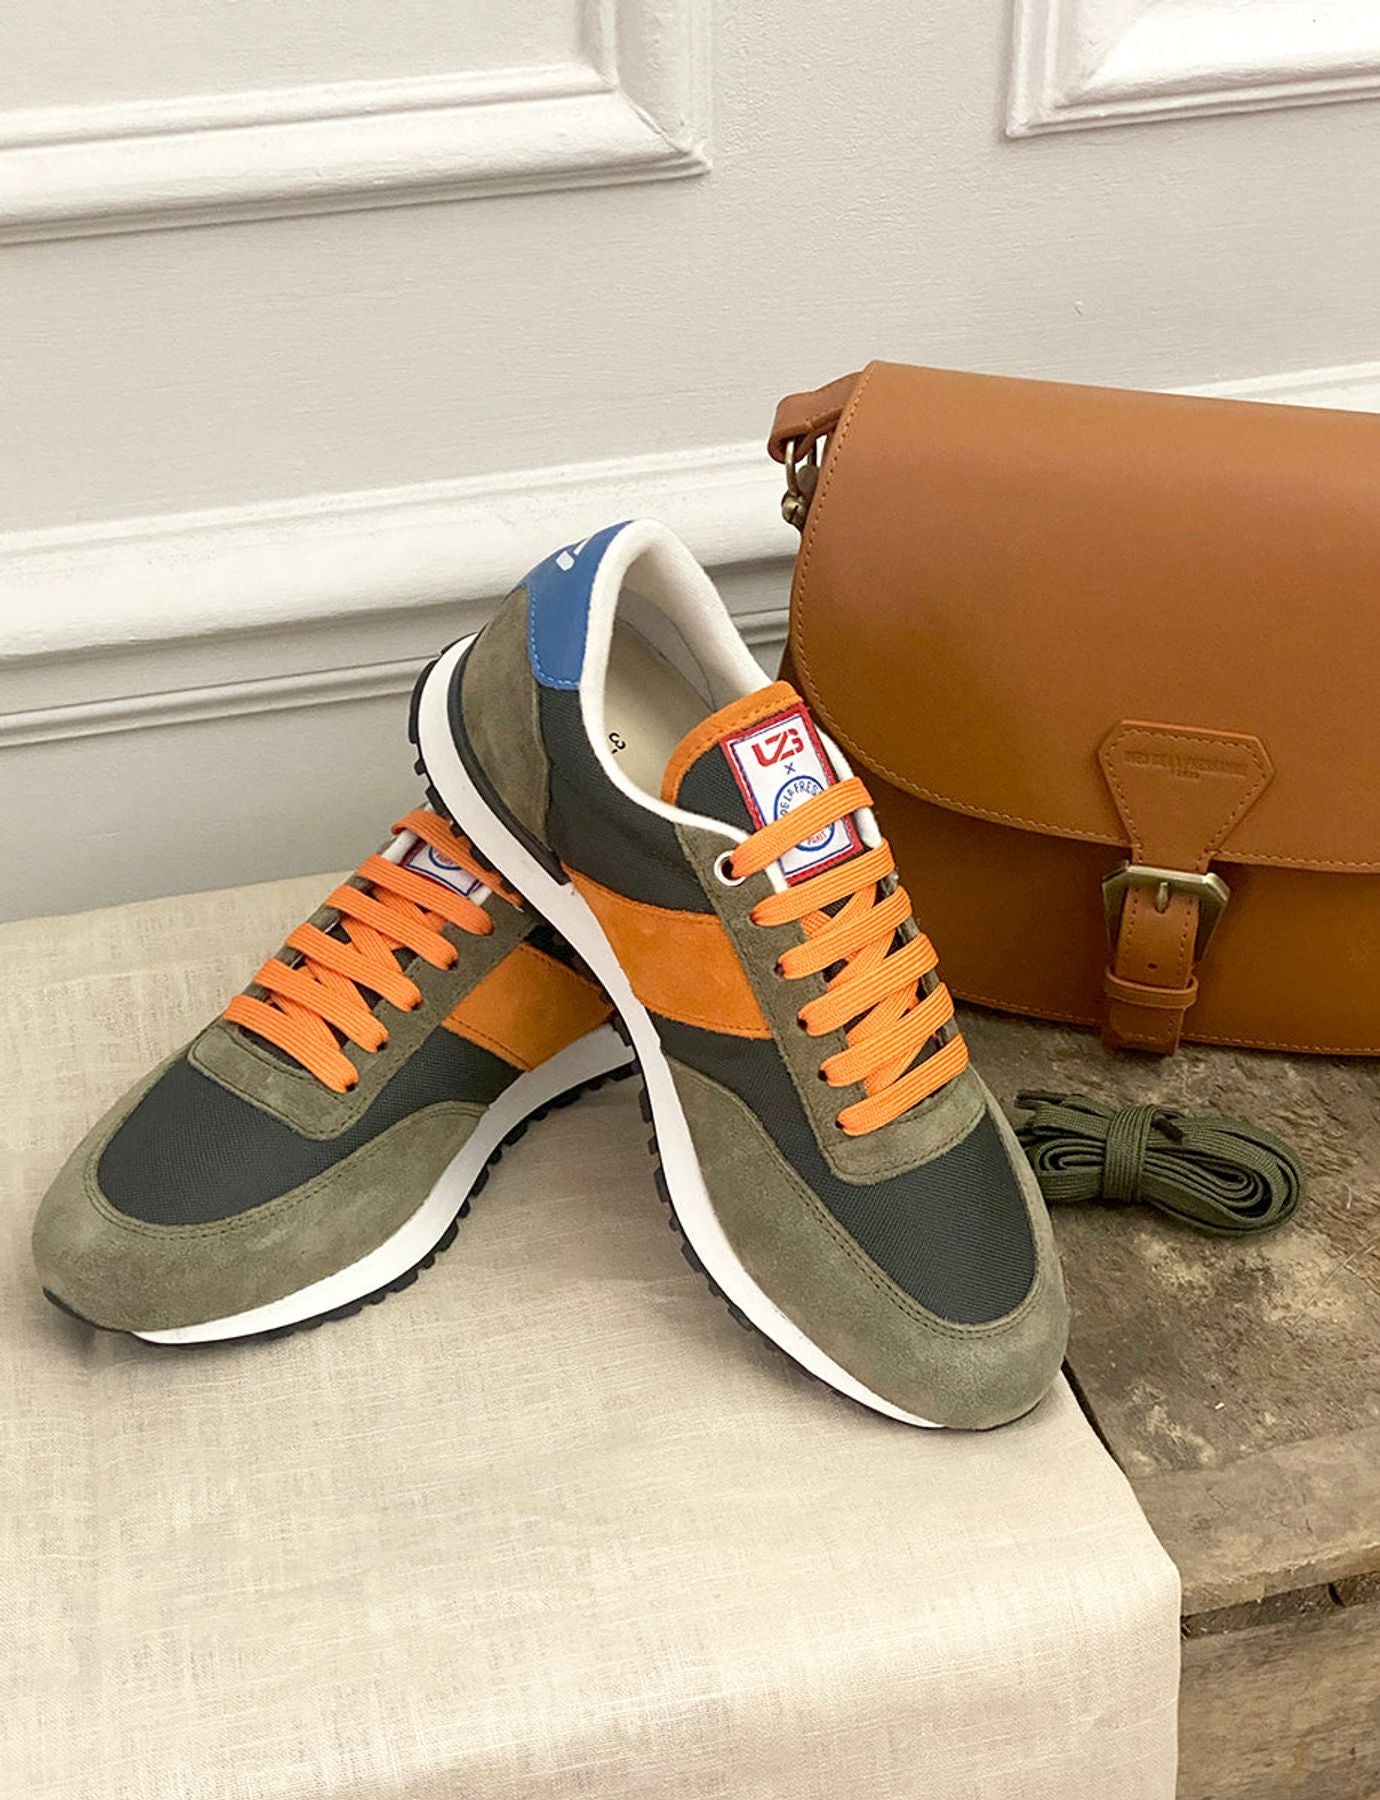 scarpe da ginnastica-quot-77-quot-uzs-x-unisex-kaki-arancio-blu